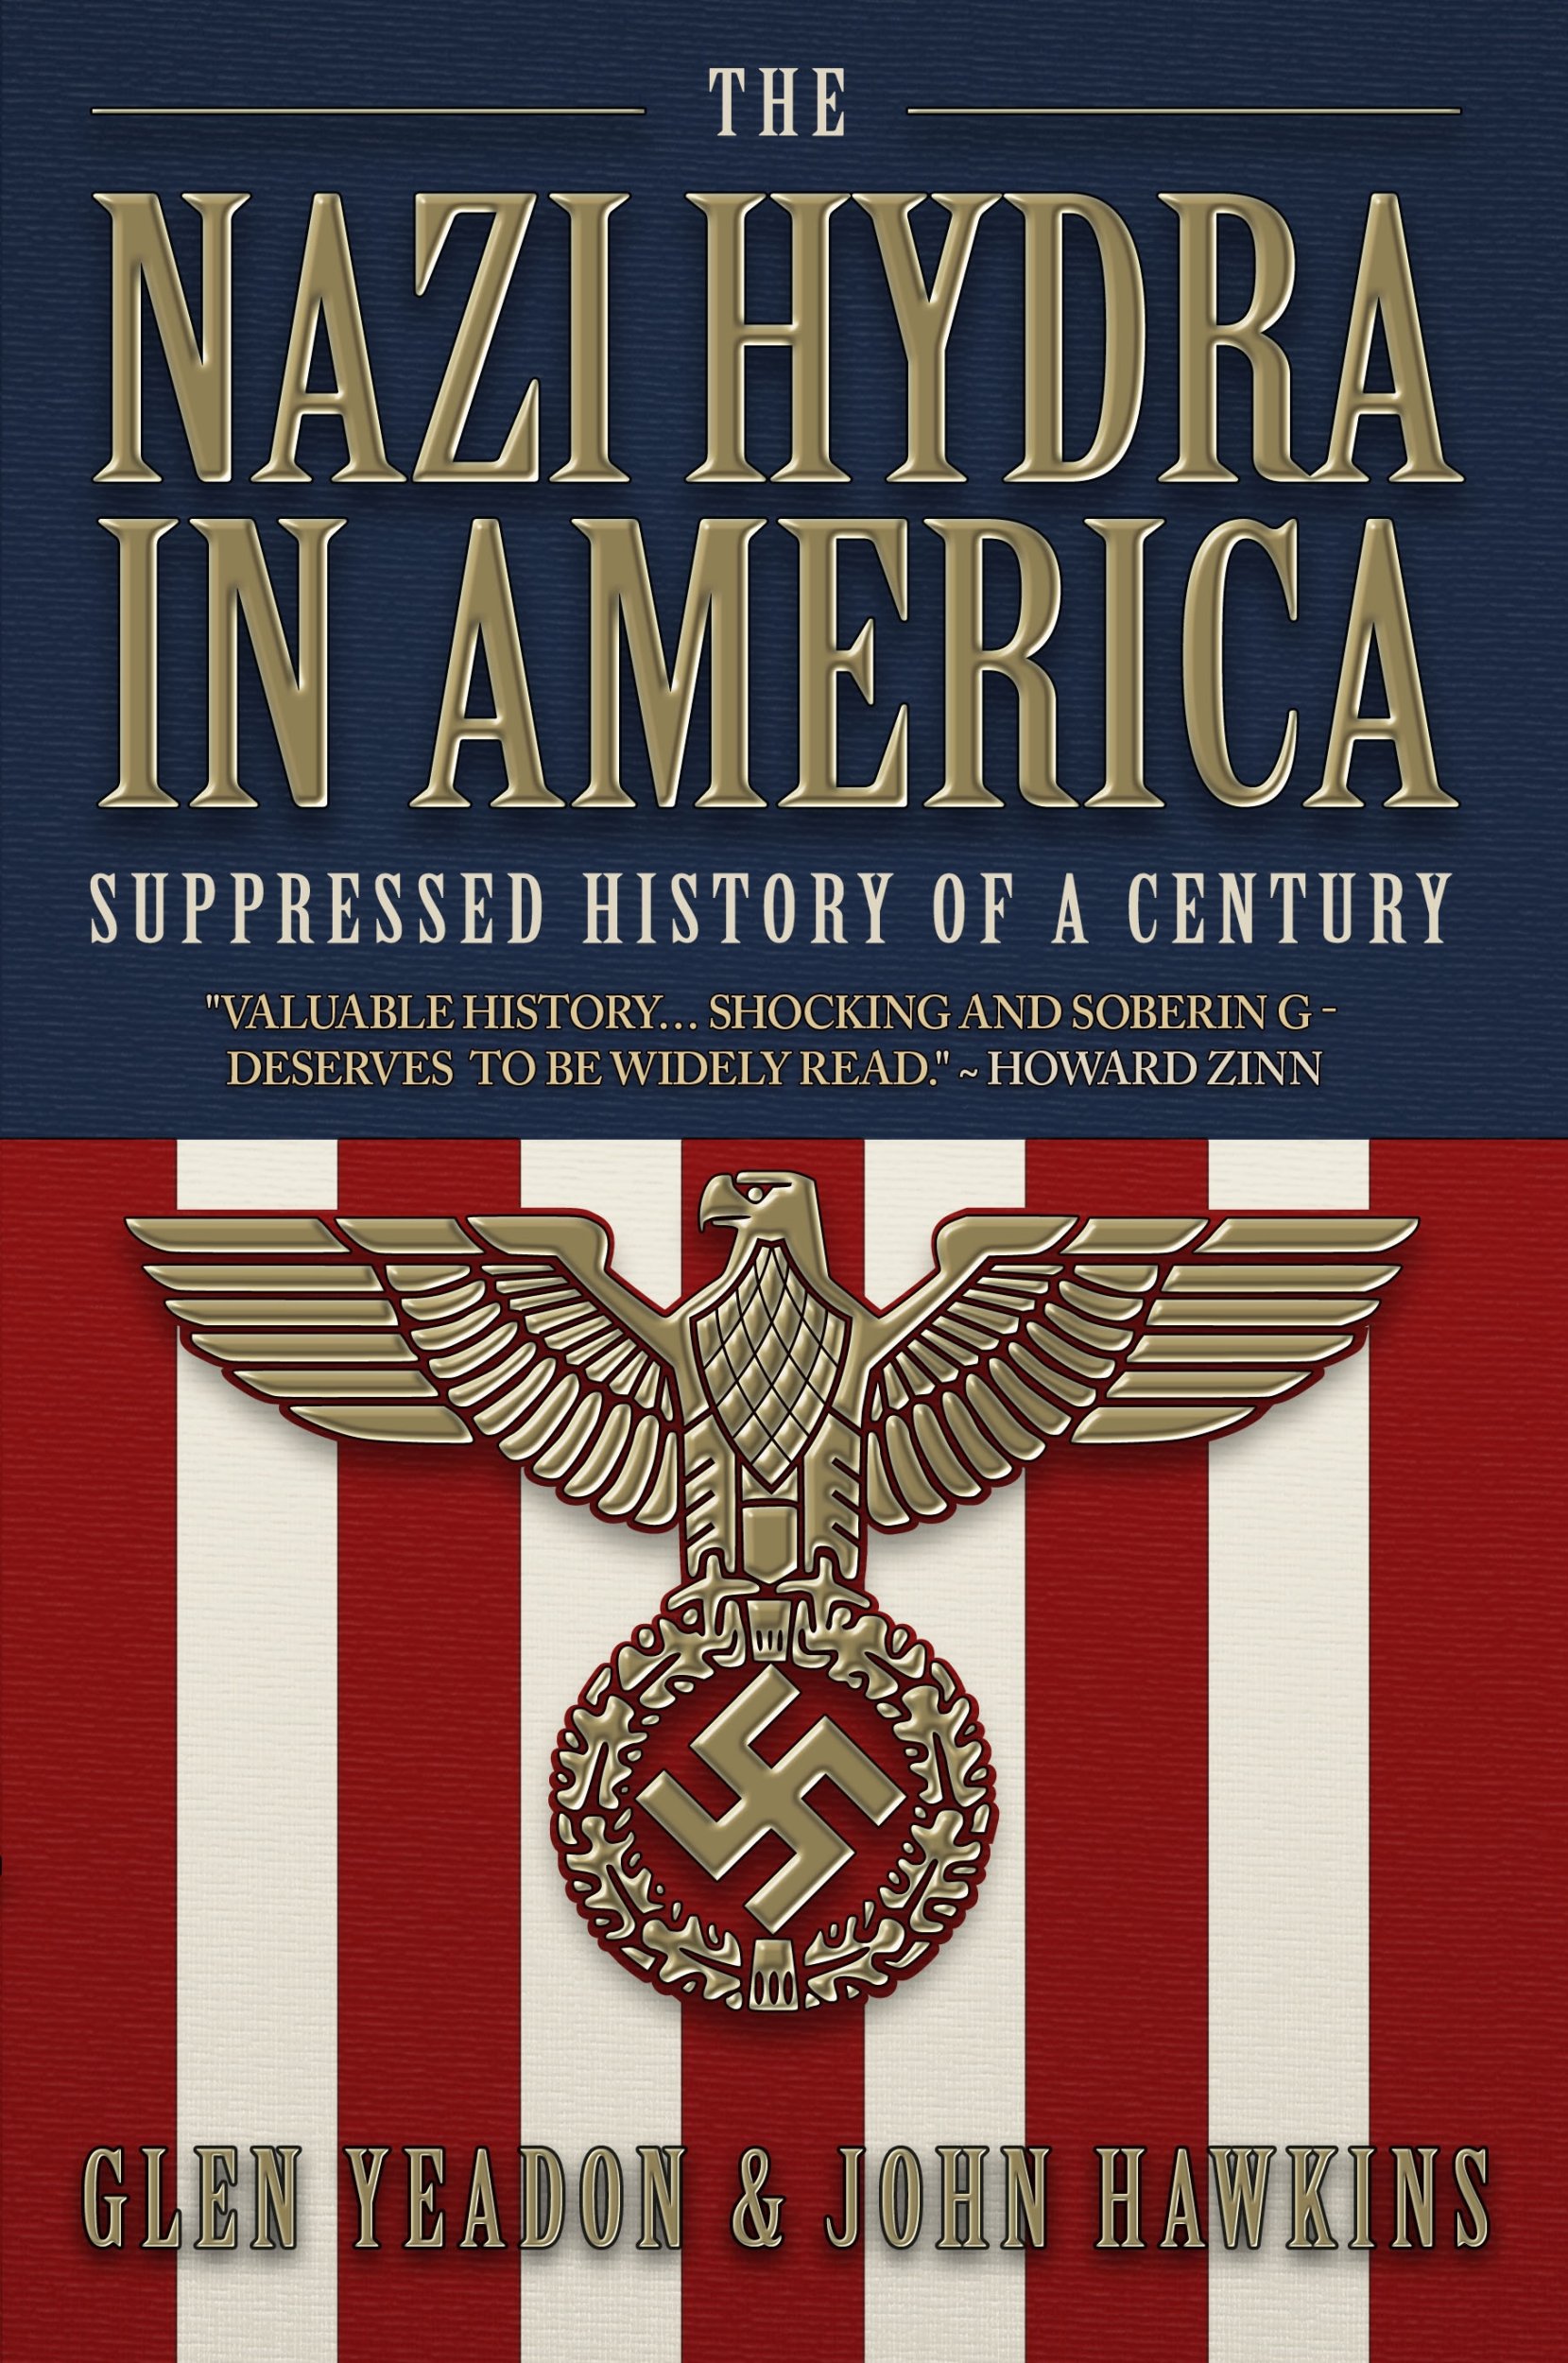 Image of The Nazi Hydra In America, By Glen Yeadon